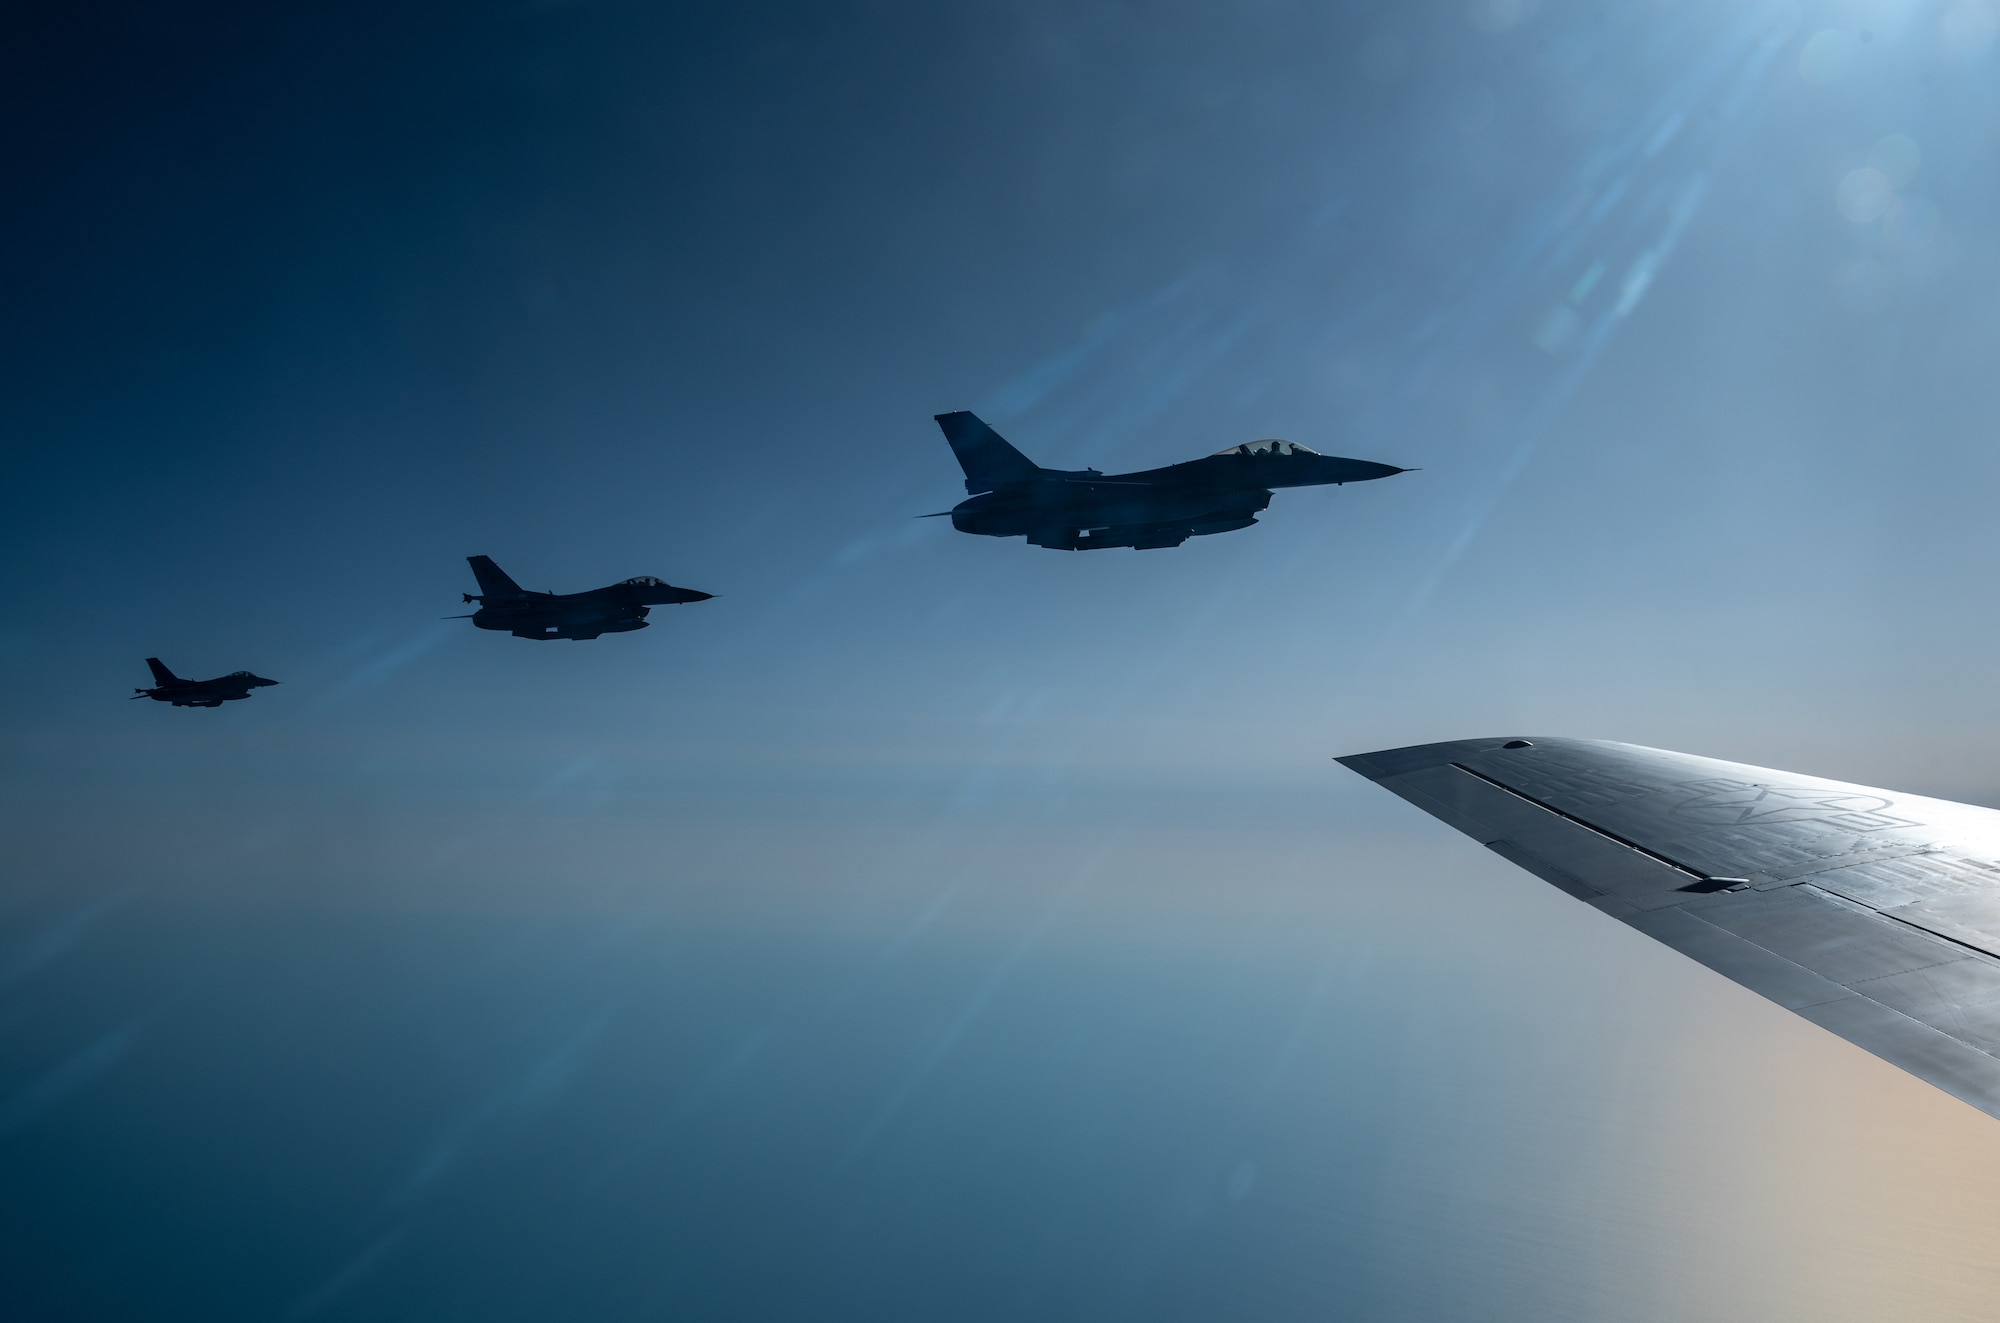 Three aircraft fly alongside an aircraft